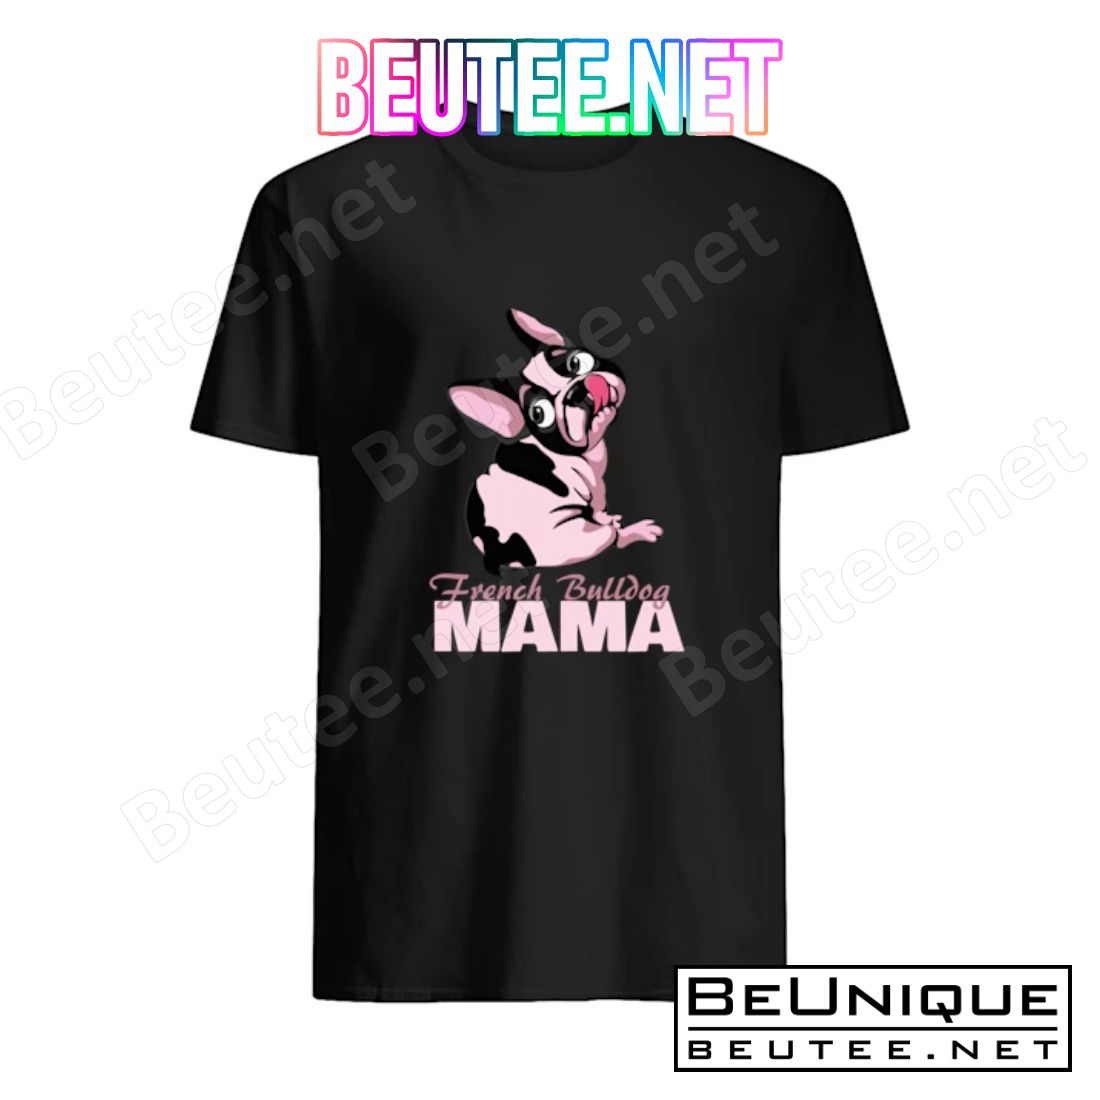 French Bulldog Mama Shirt